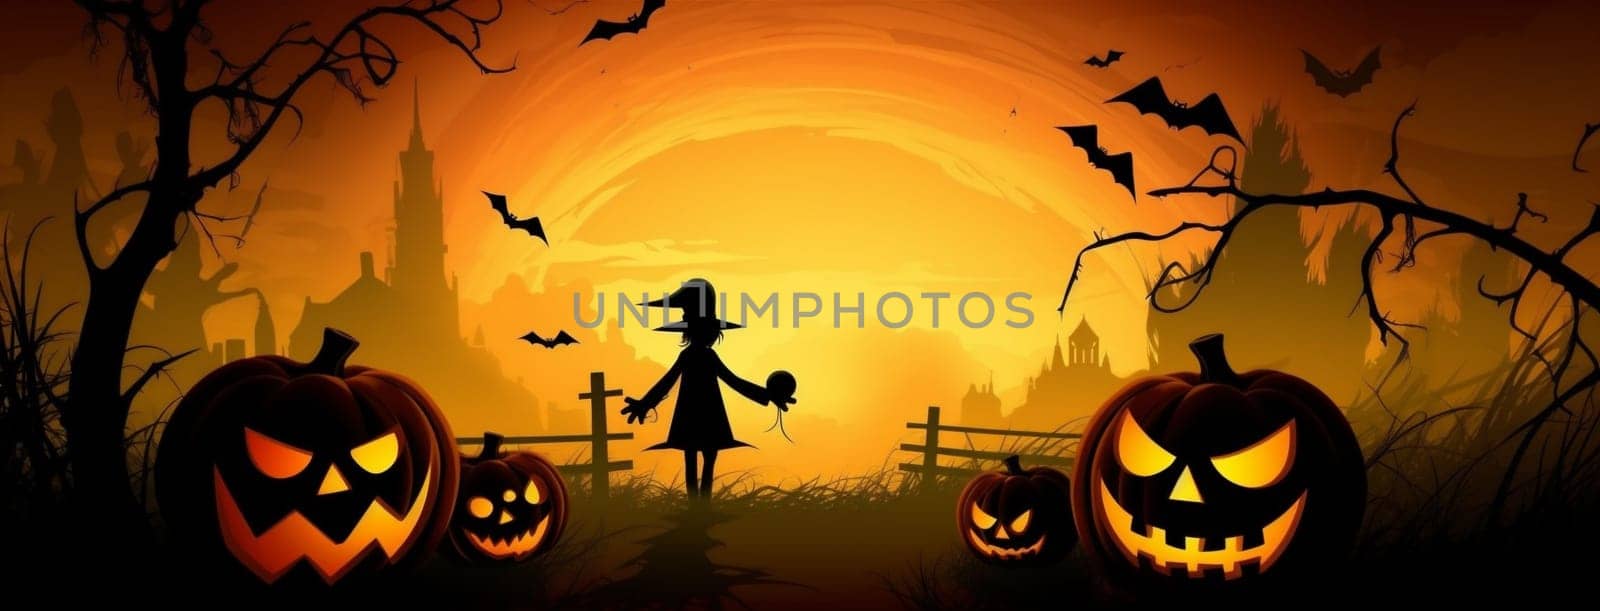 black lantern background ghost jack october halloween orange illustration night design glowing scary bat holiday grave dark horror pumpkin treat. Generative AI.